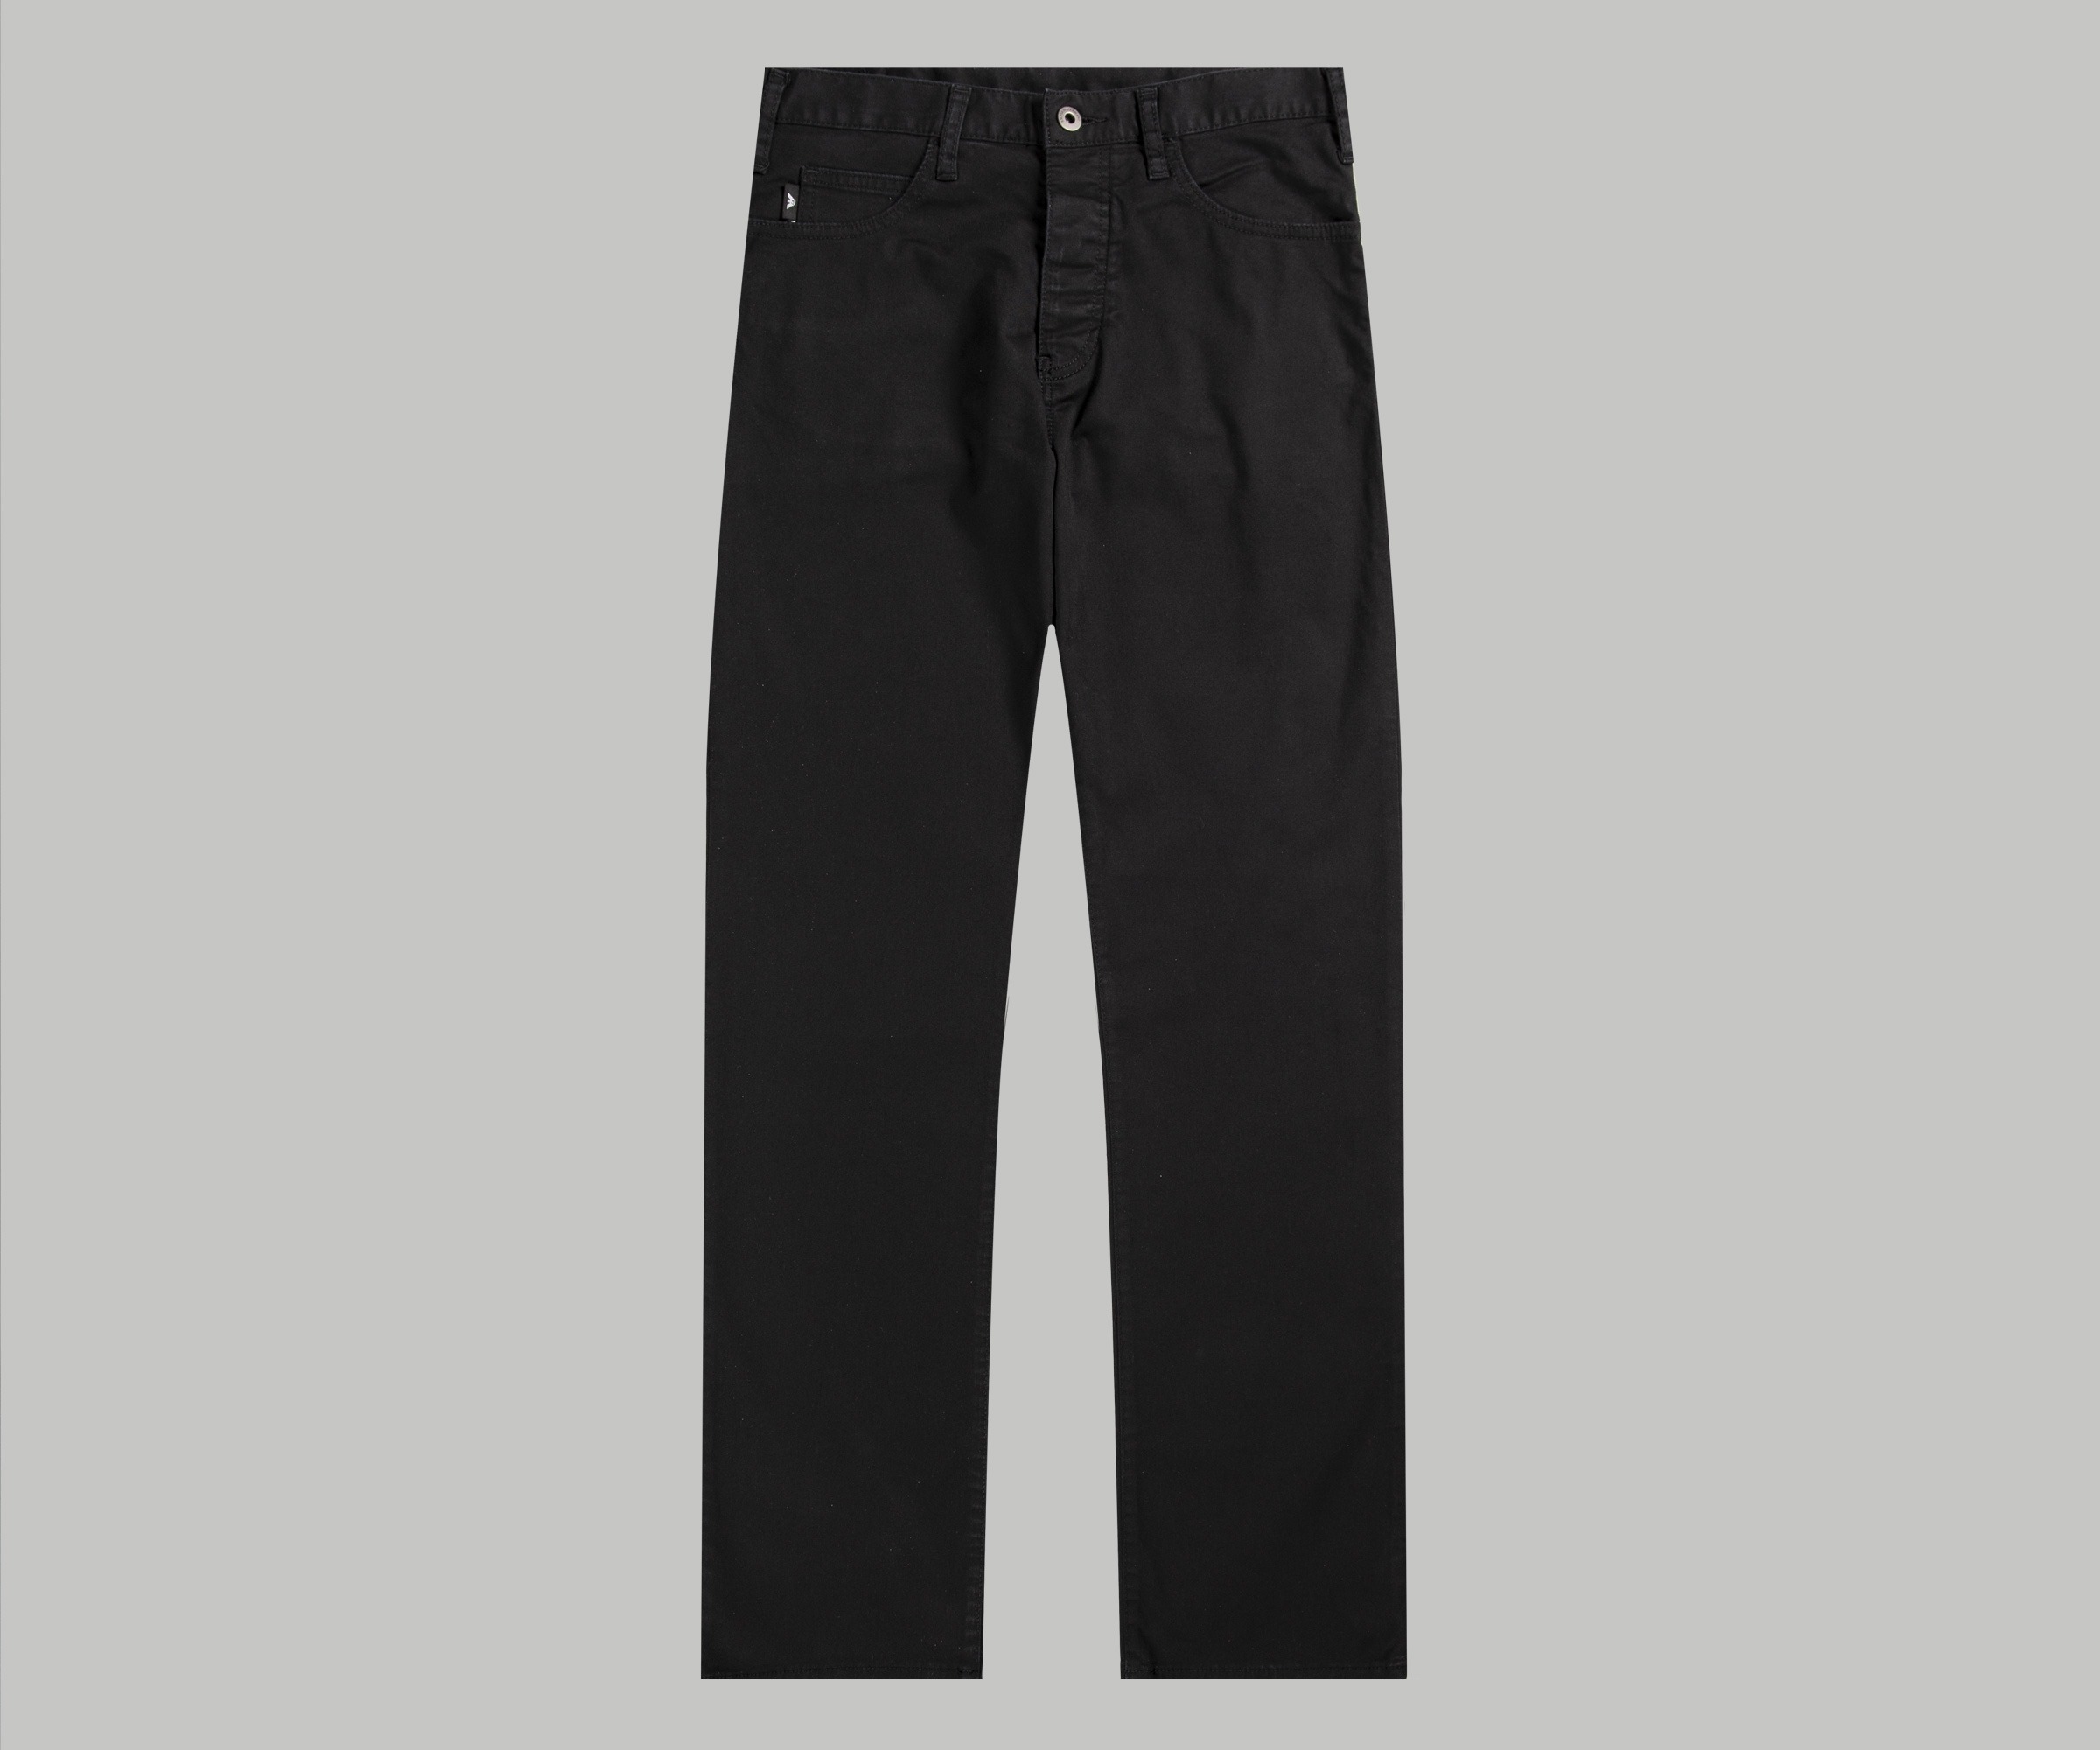 Emporio Armani ’J21’ Classic Regular Fit Jeans Black